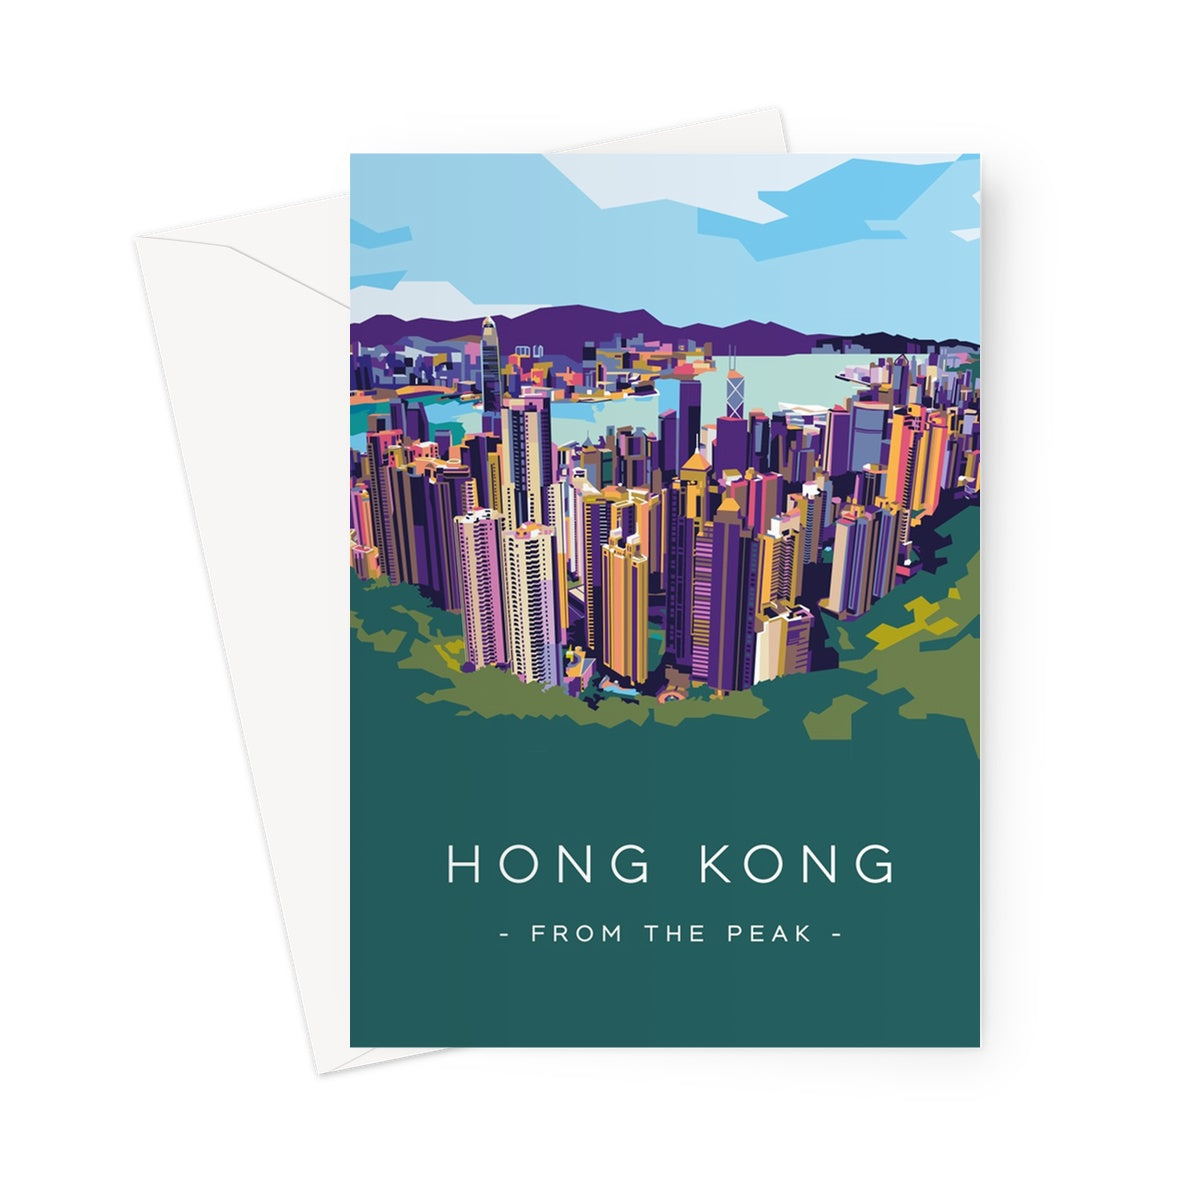 Hong Kong Travel - From the Peak Greeting Card